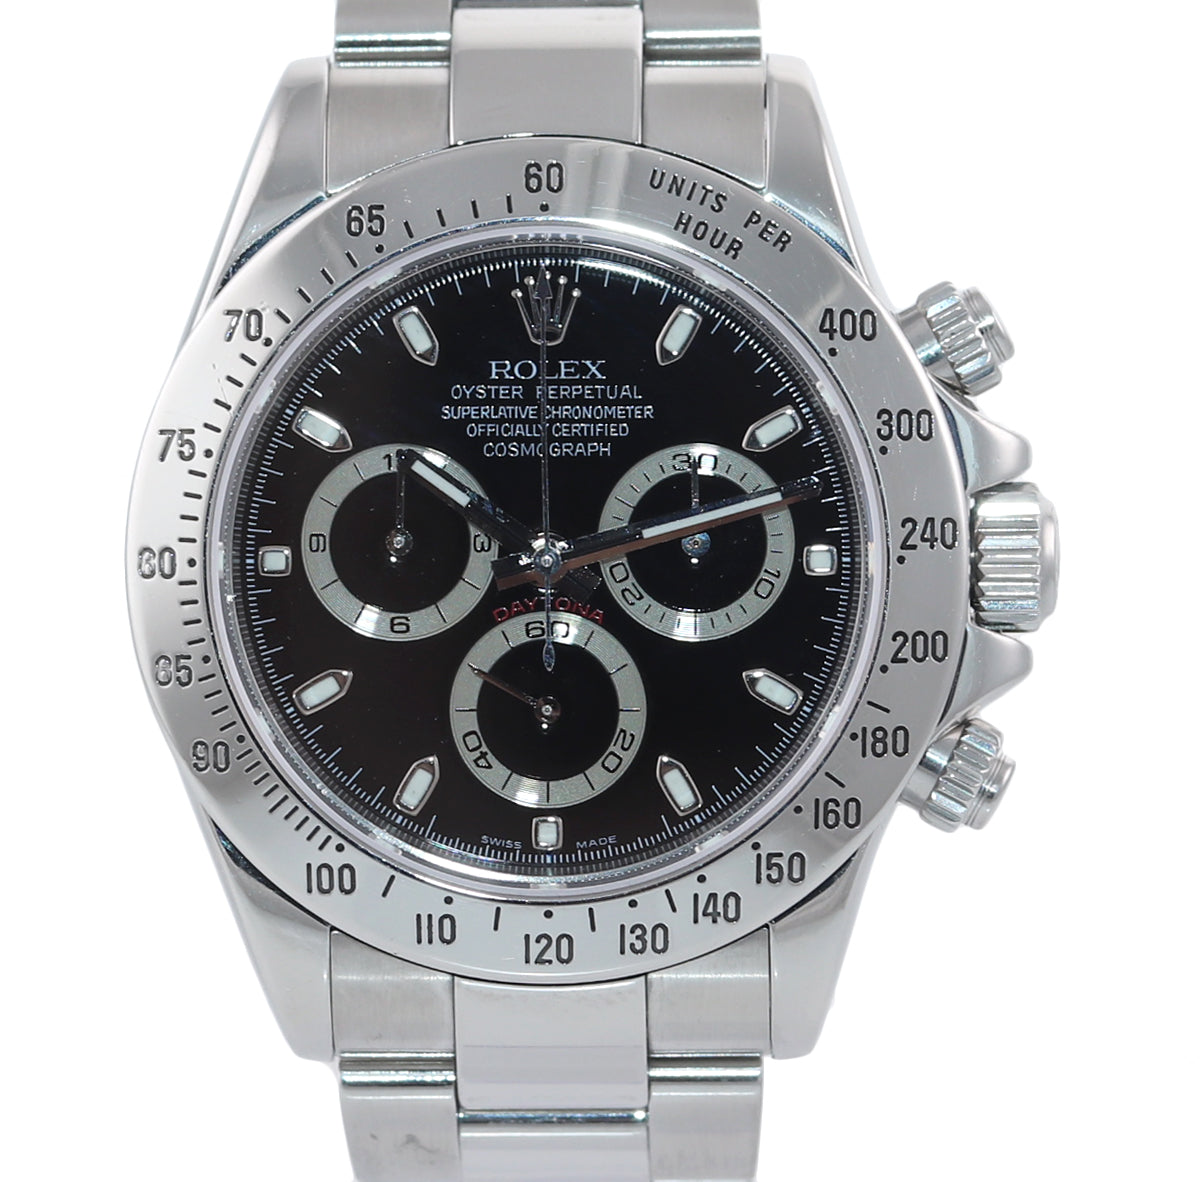 MINT Rolex Daytona 116520 Black Dial Steel Chronograph 40mm Watch Box ...